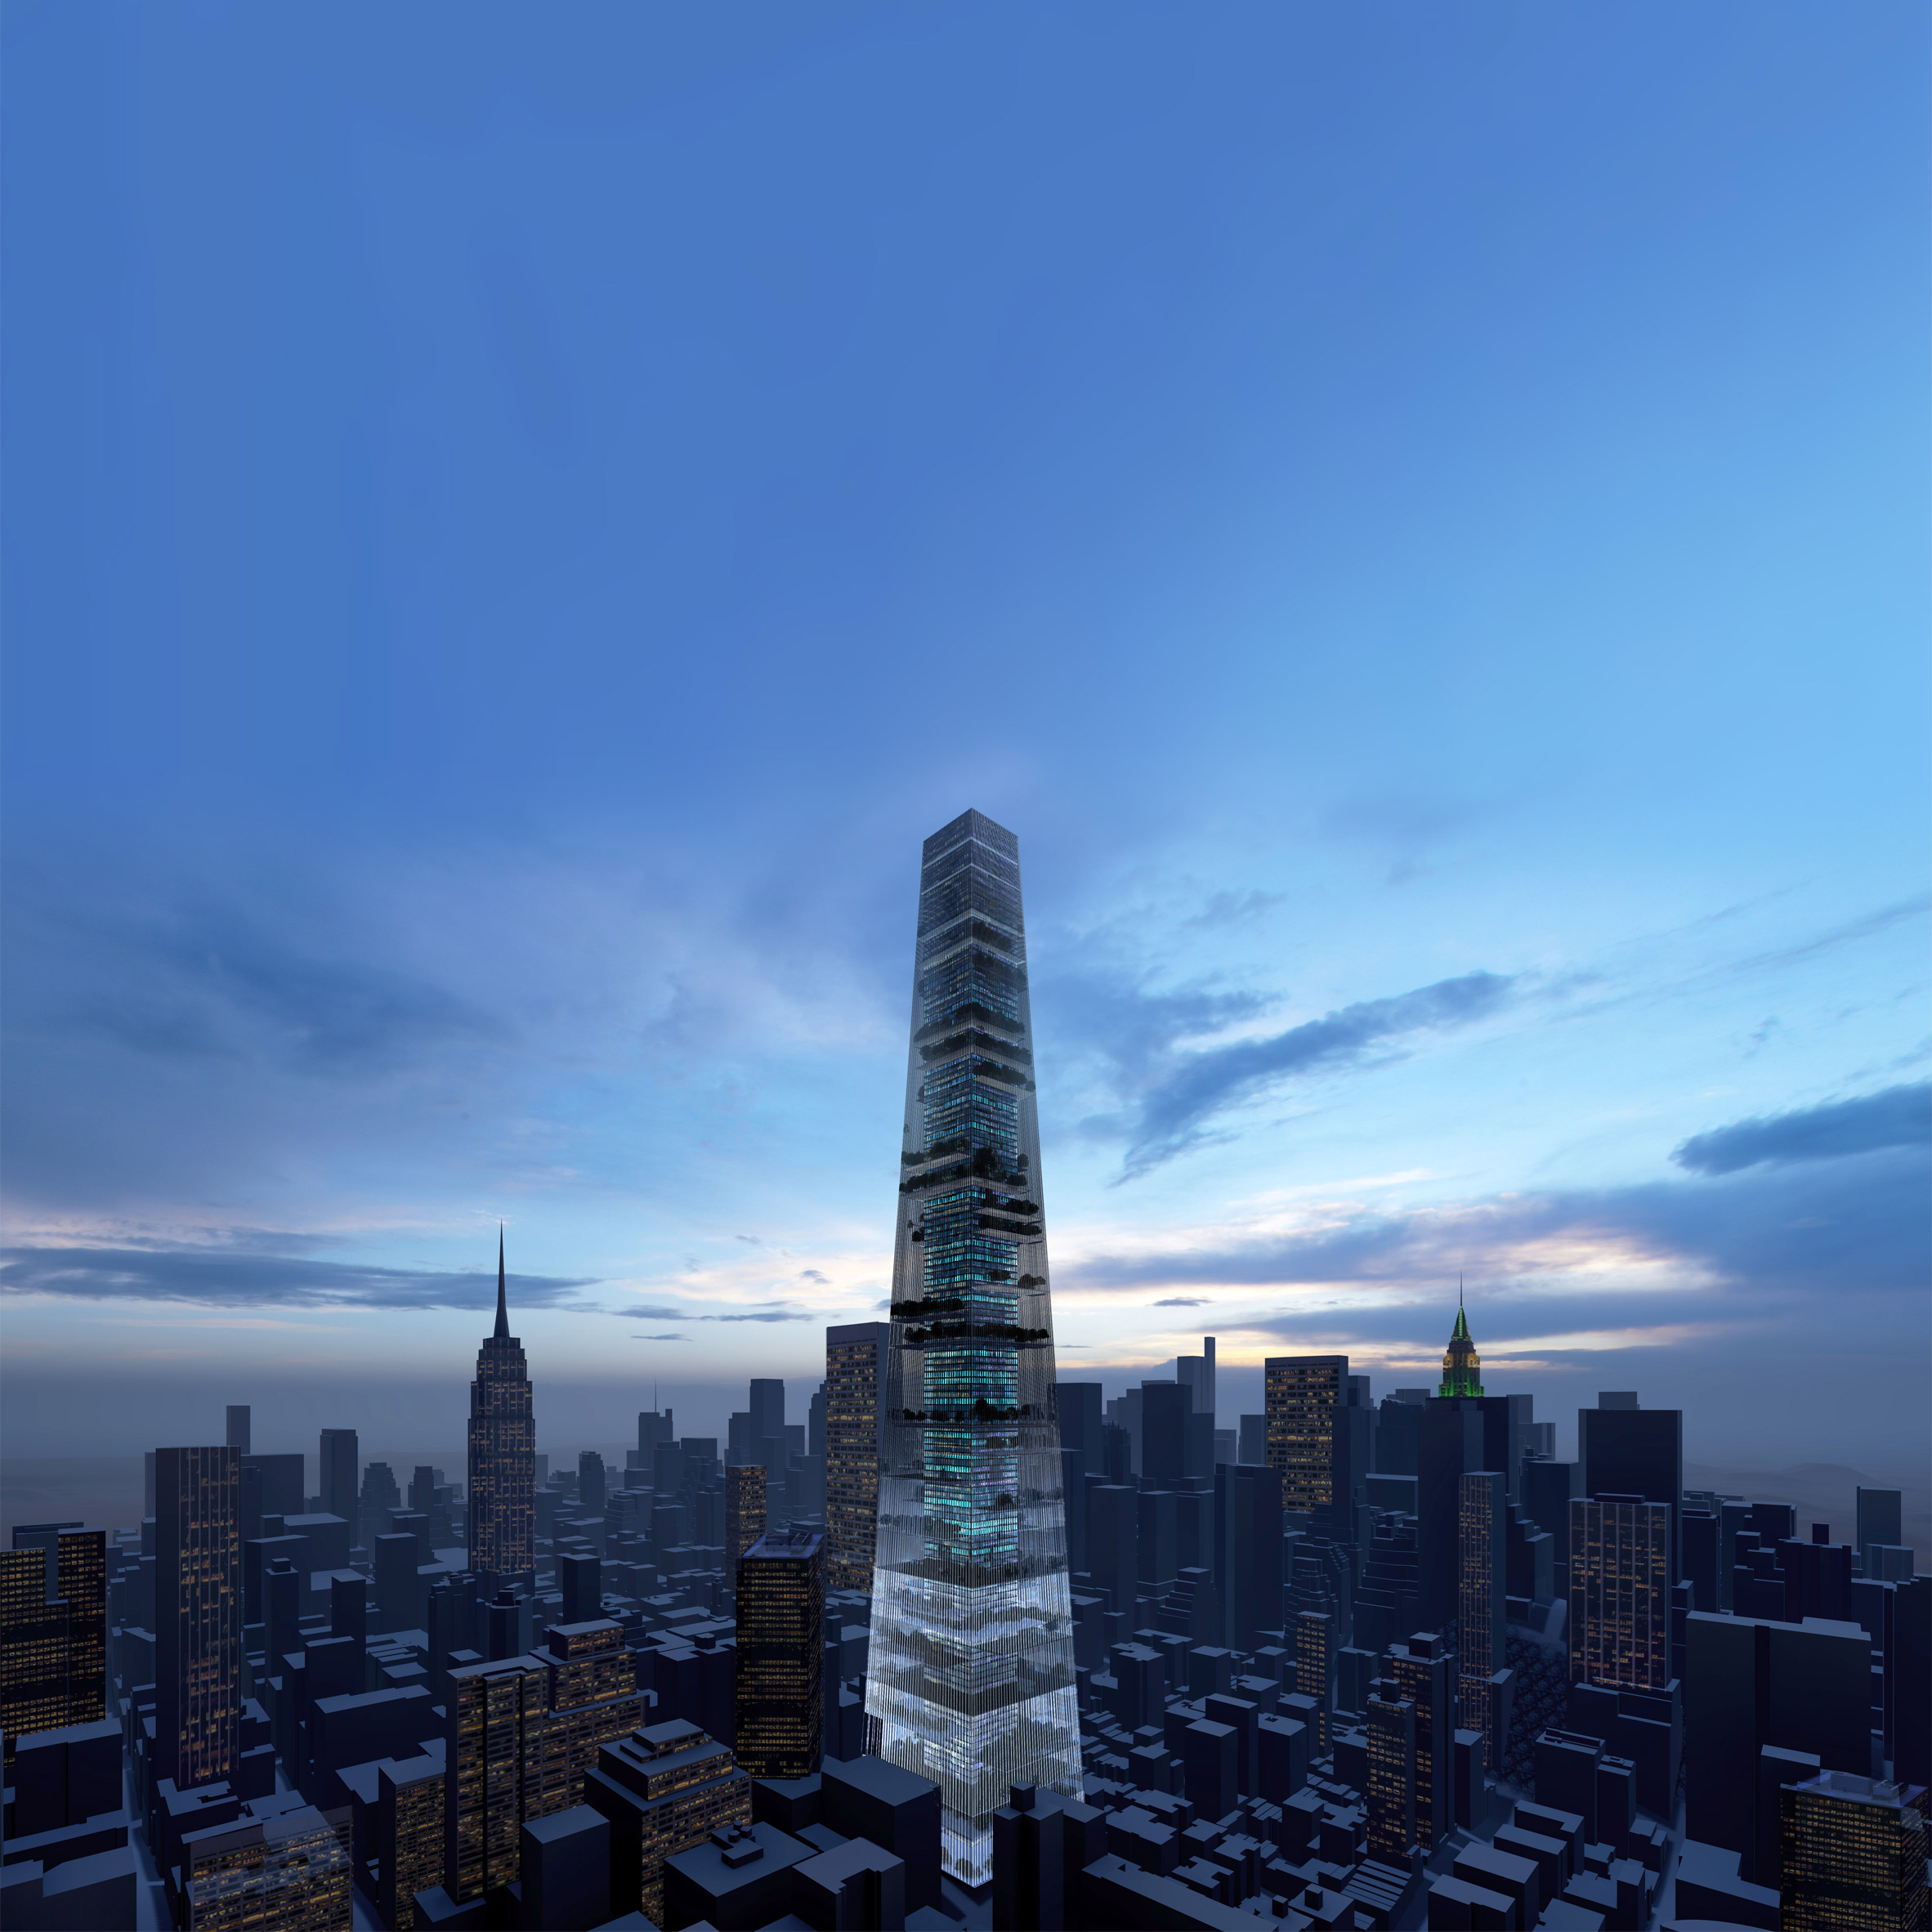 Skylines Tower by Piero Lissoni